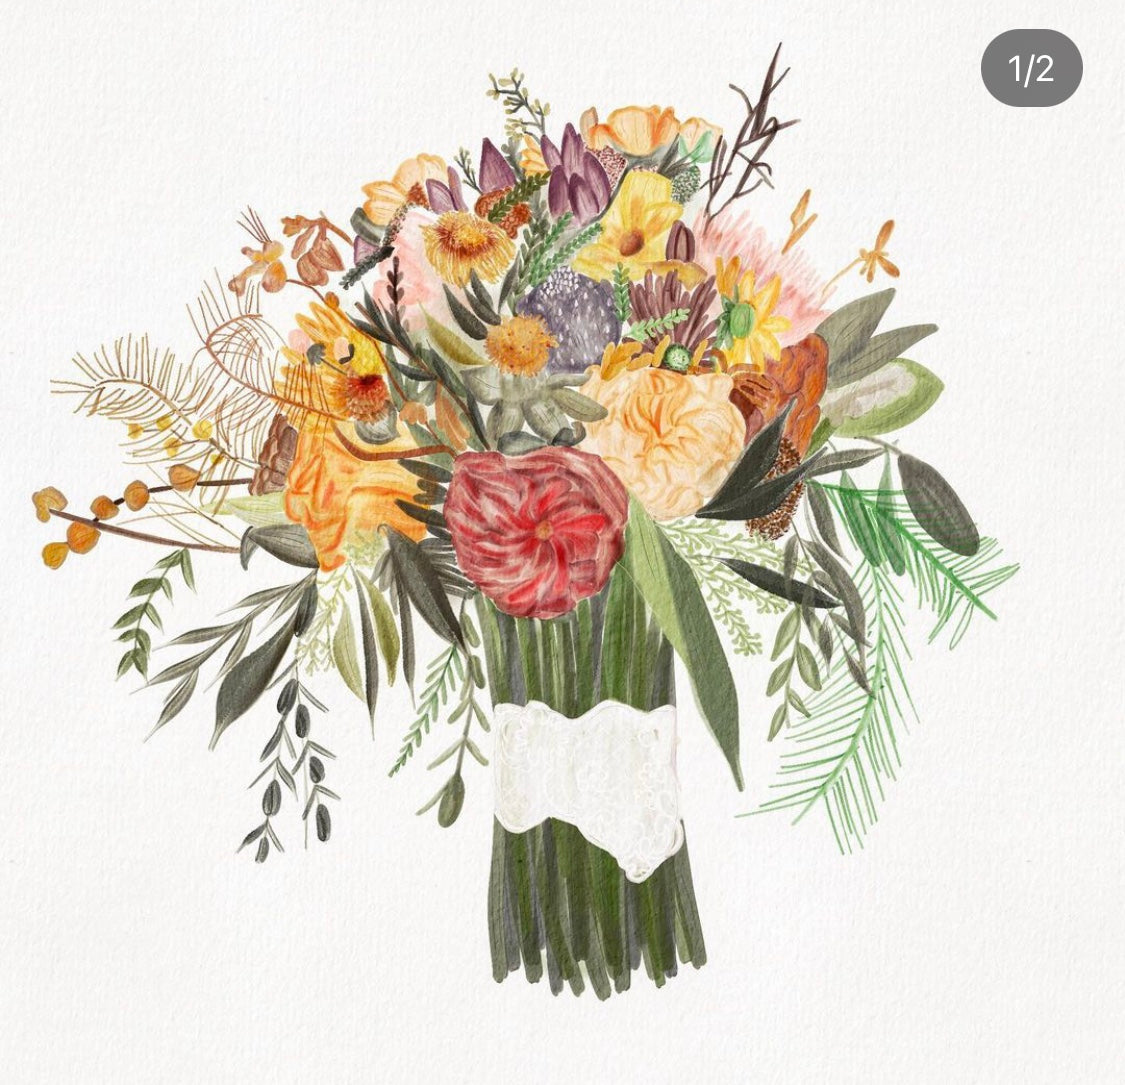 Watercolor Wedding Bouquet 8x10” Print